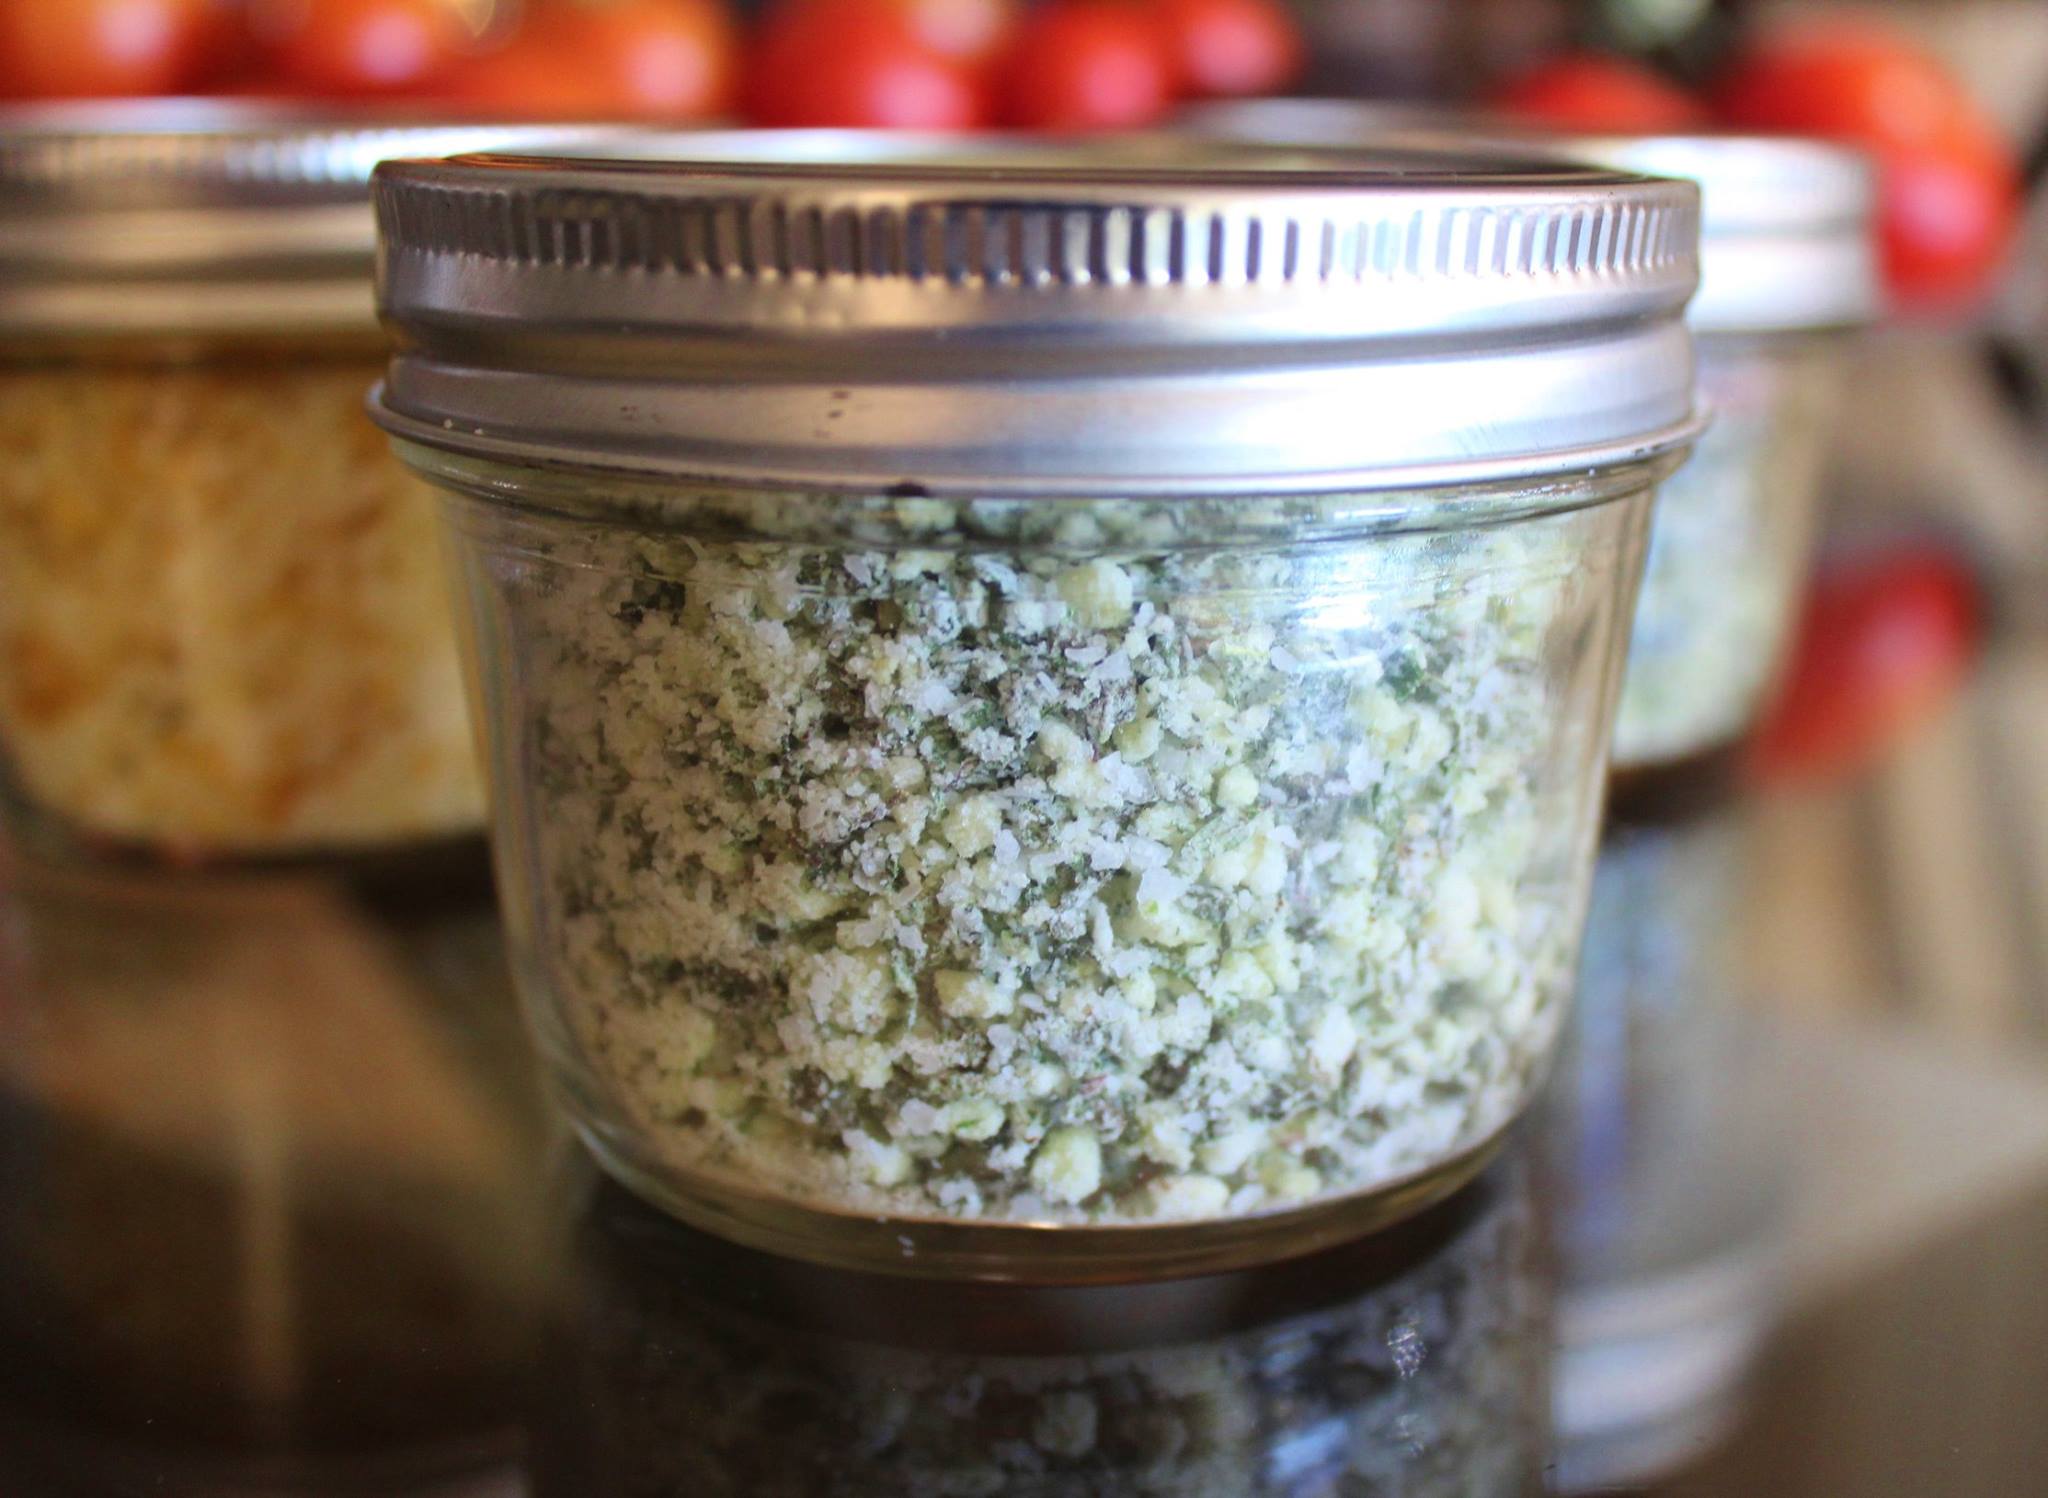 I store the herb salt in Mason jars